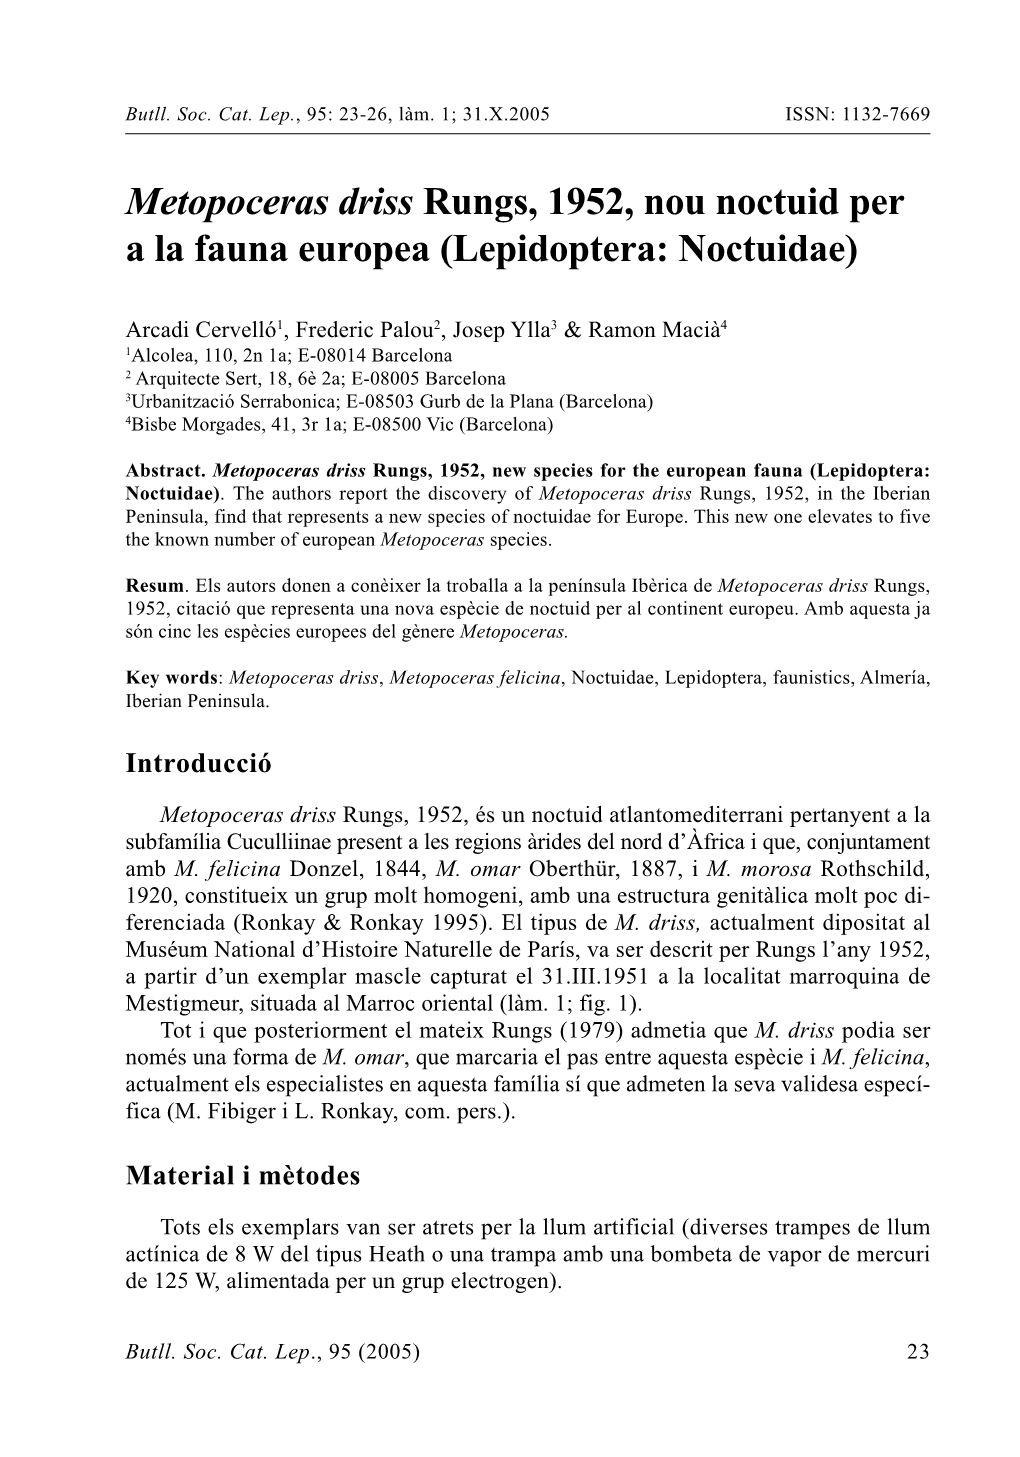 Metopoceras Driss Rungs, 1952, Nou Noctuid Per a La Fauna Europea (Lepidoptera: Noctuidae)